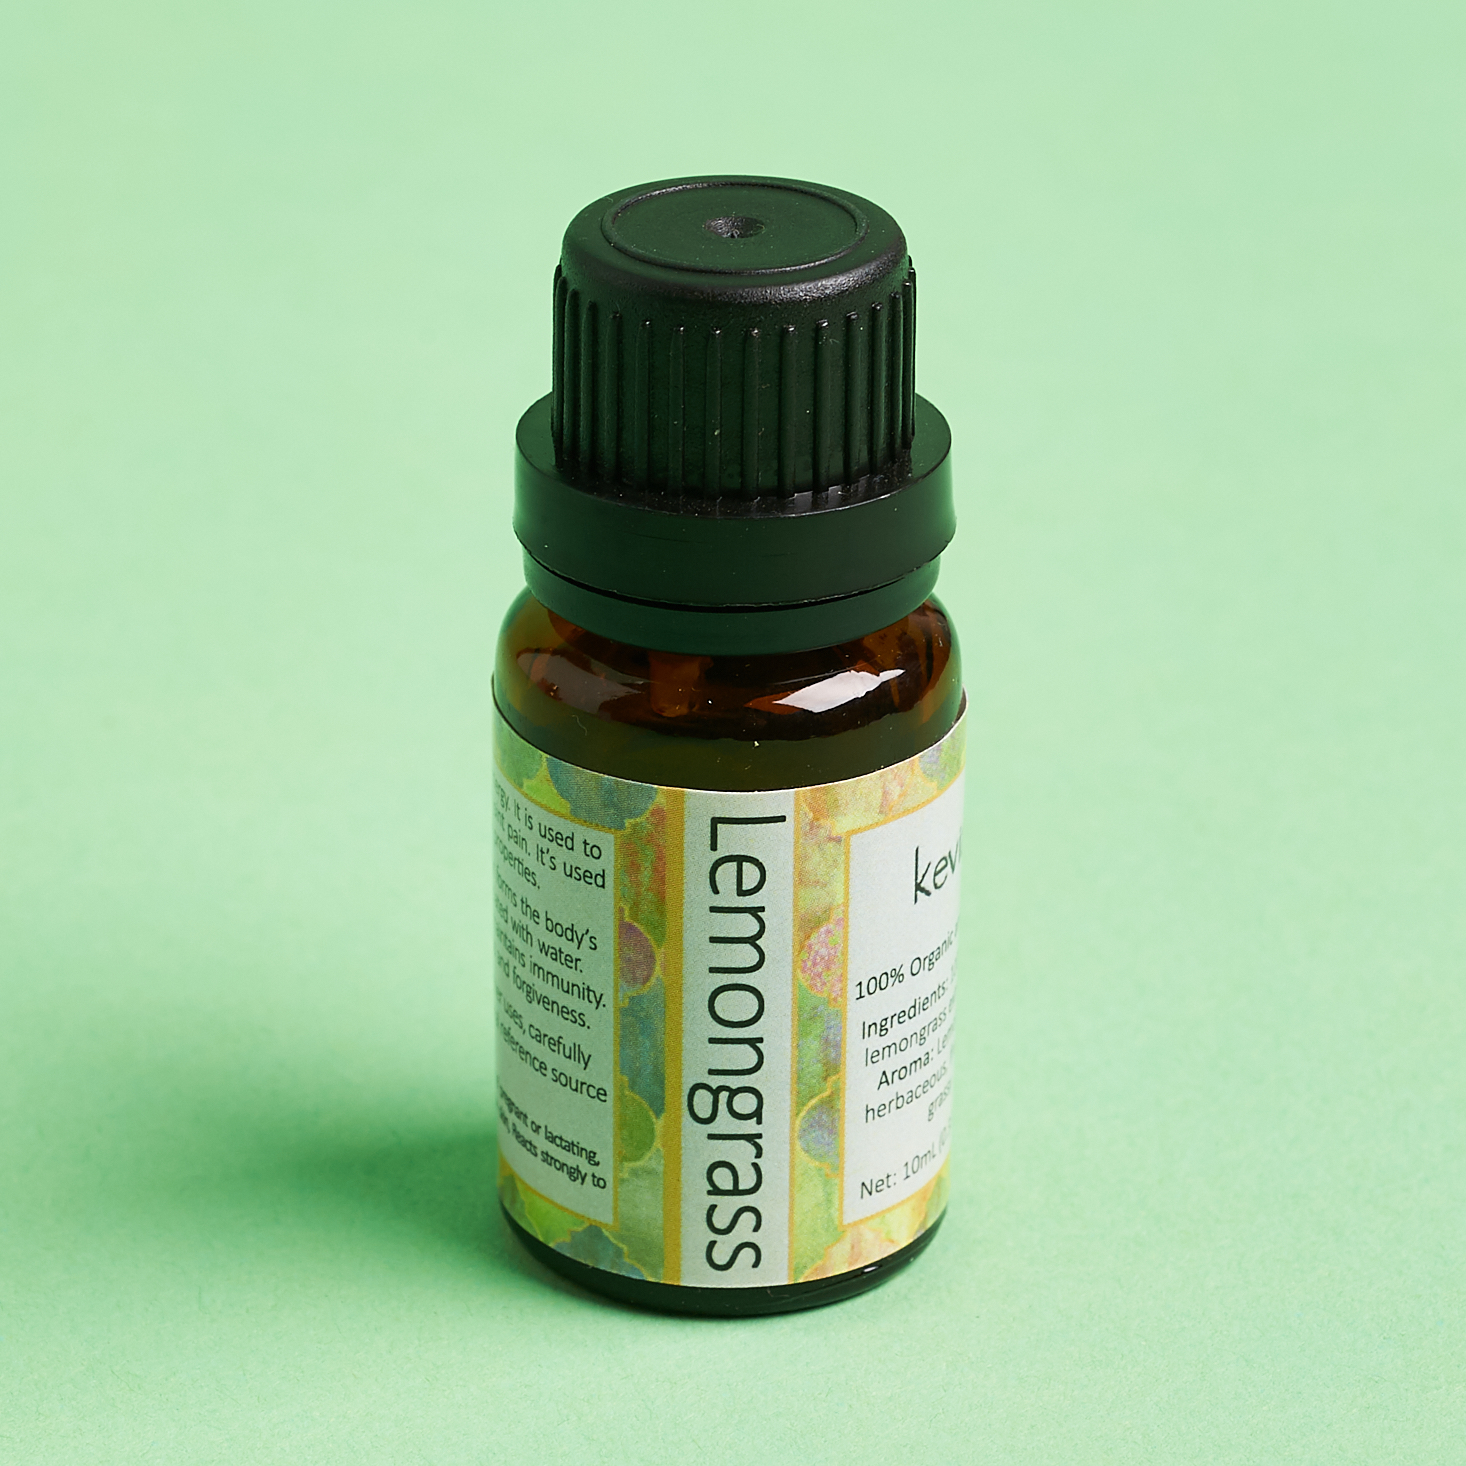 lemongrass essential oil in amber bottle with black cap